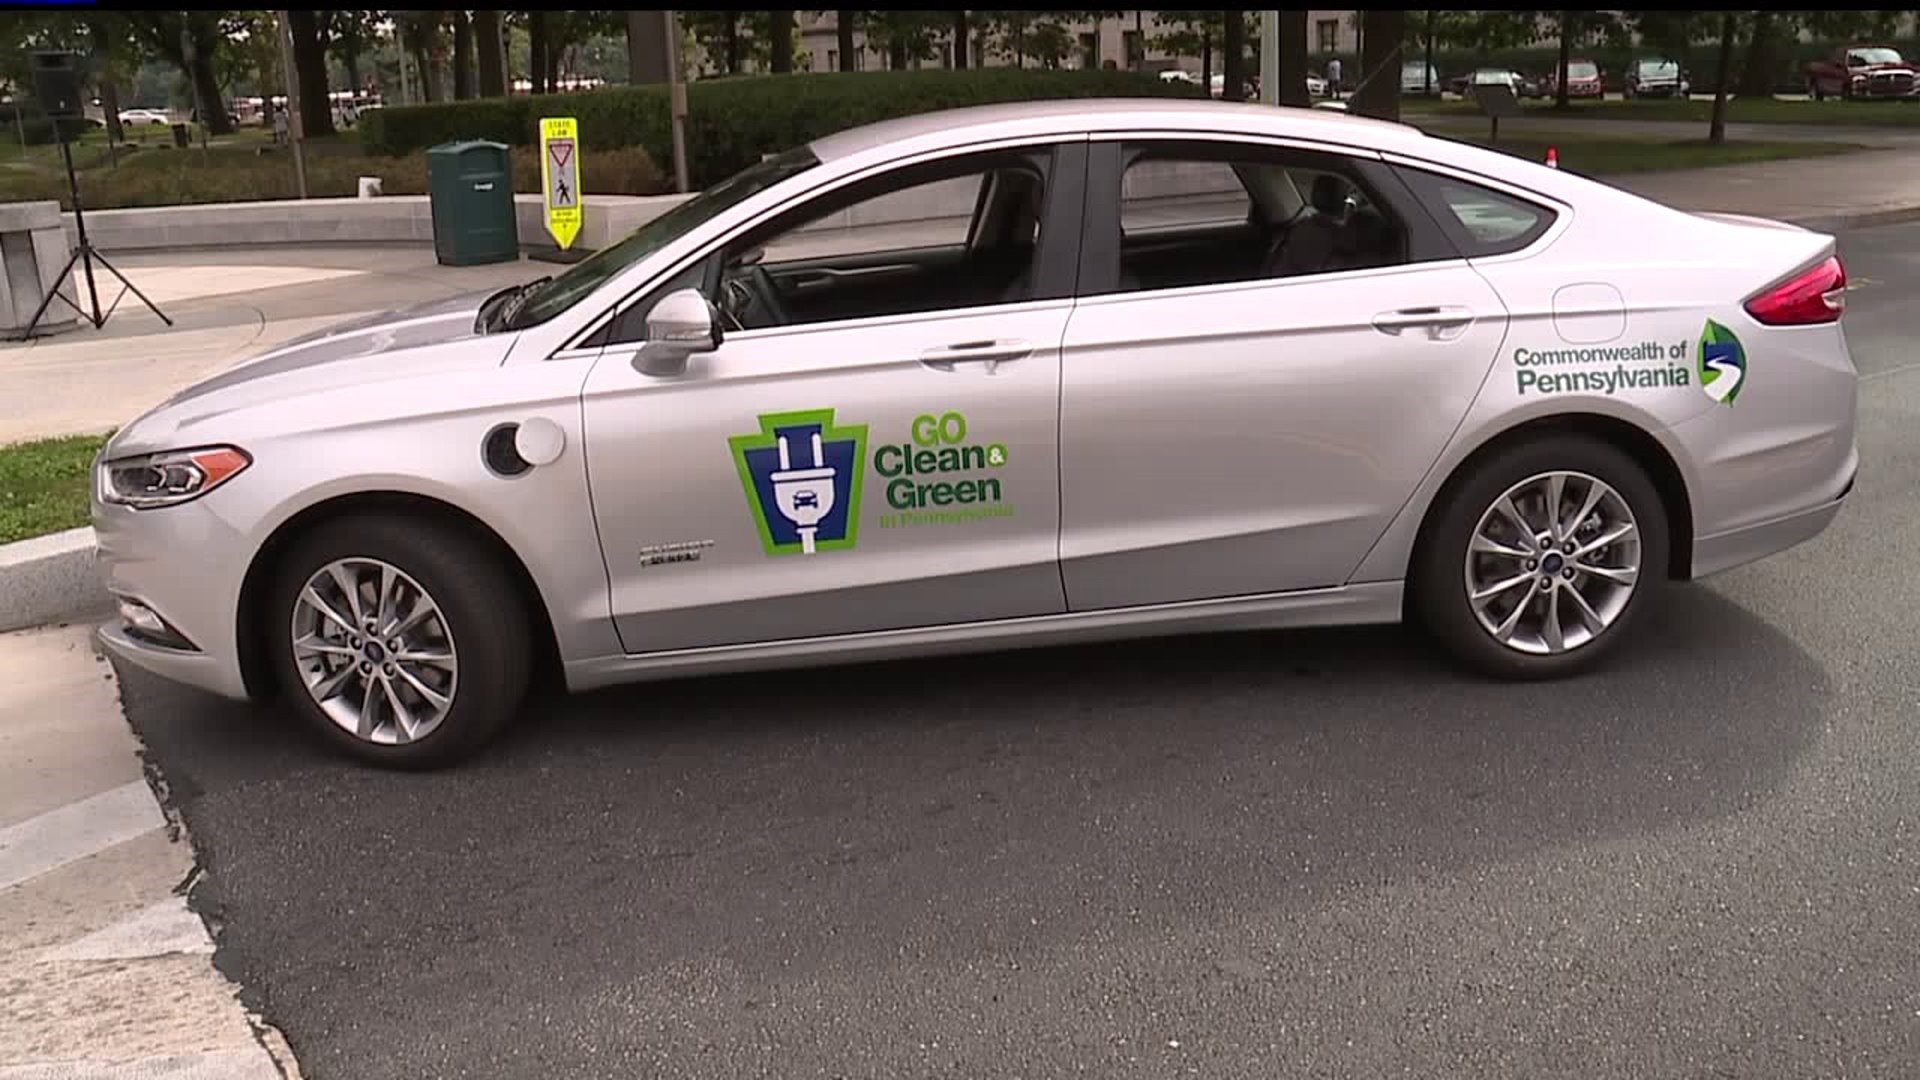 Pennsylvania will add 25 hybrid cars to its auto fleet as part of new pilot program